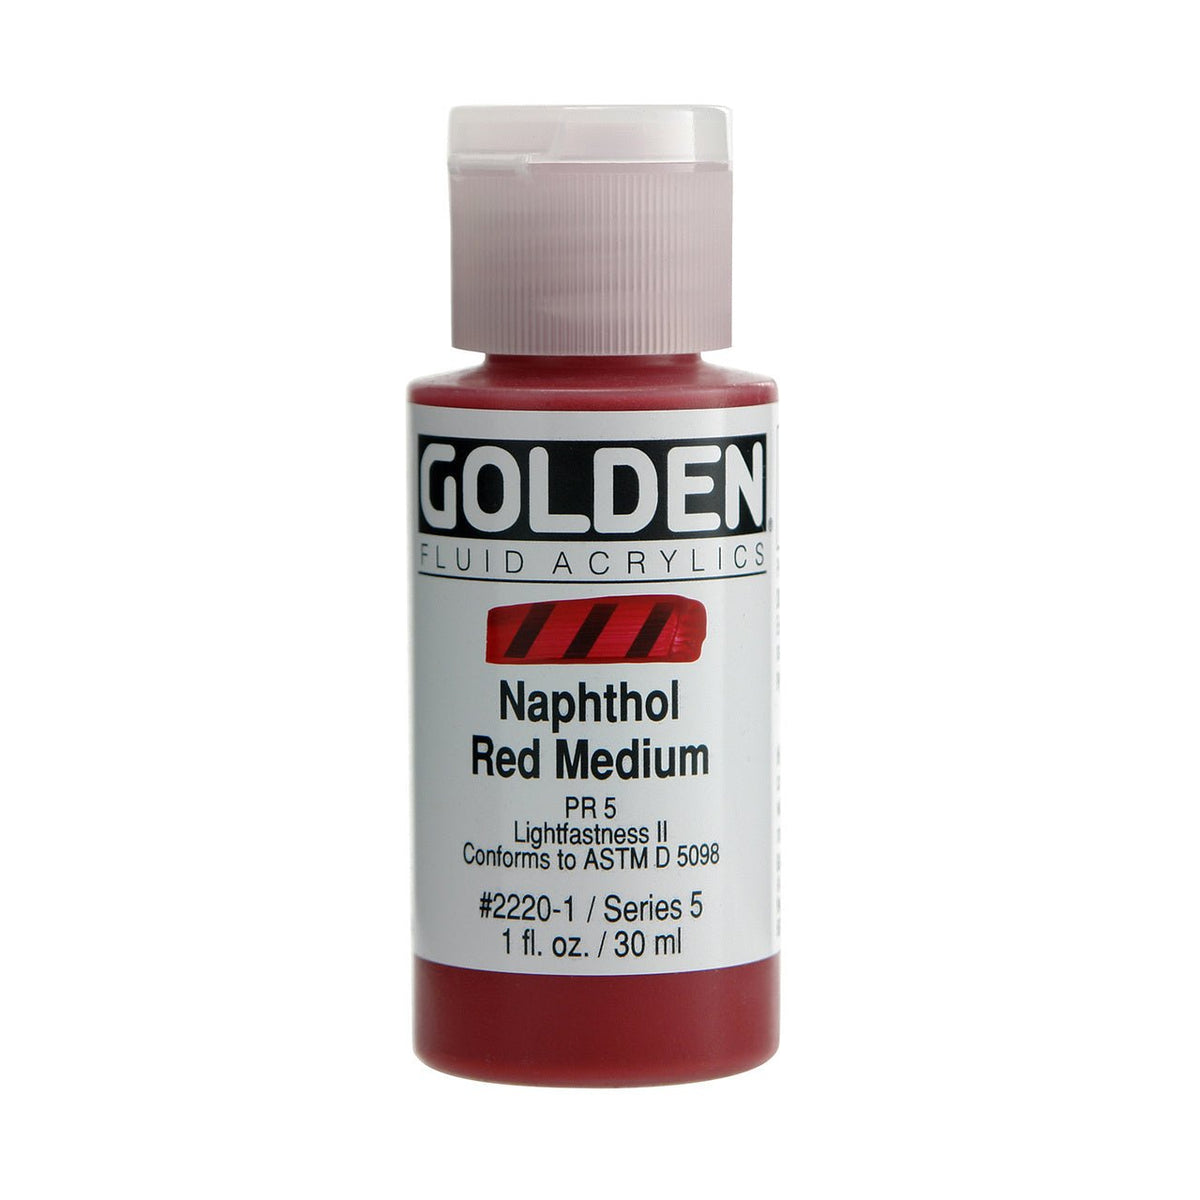 Golden Fluid Acrylic Naphthol Red Medium 1 oz - merriartist.com